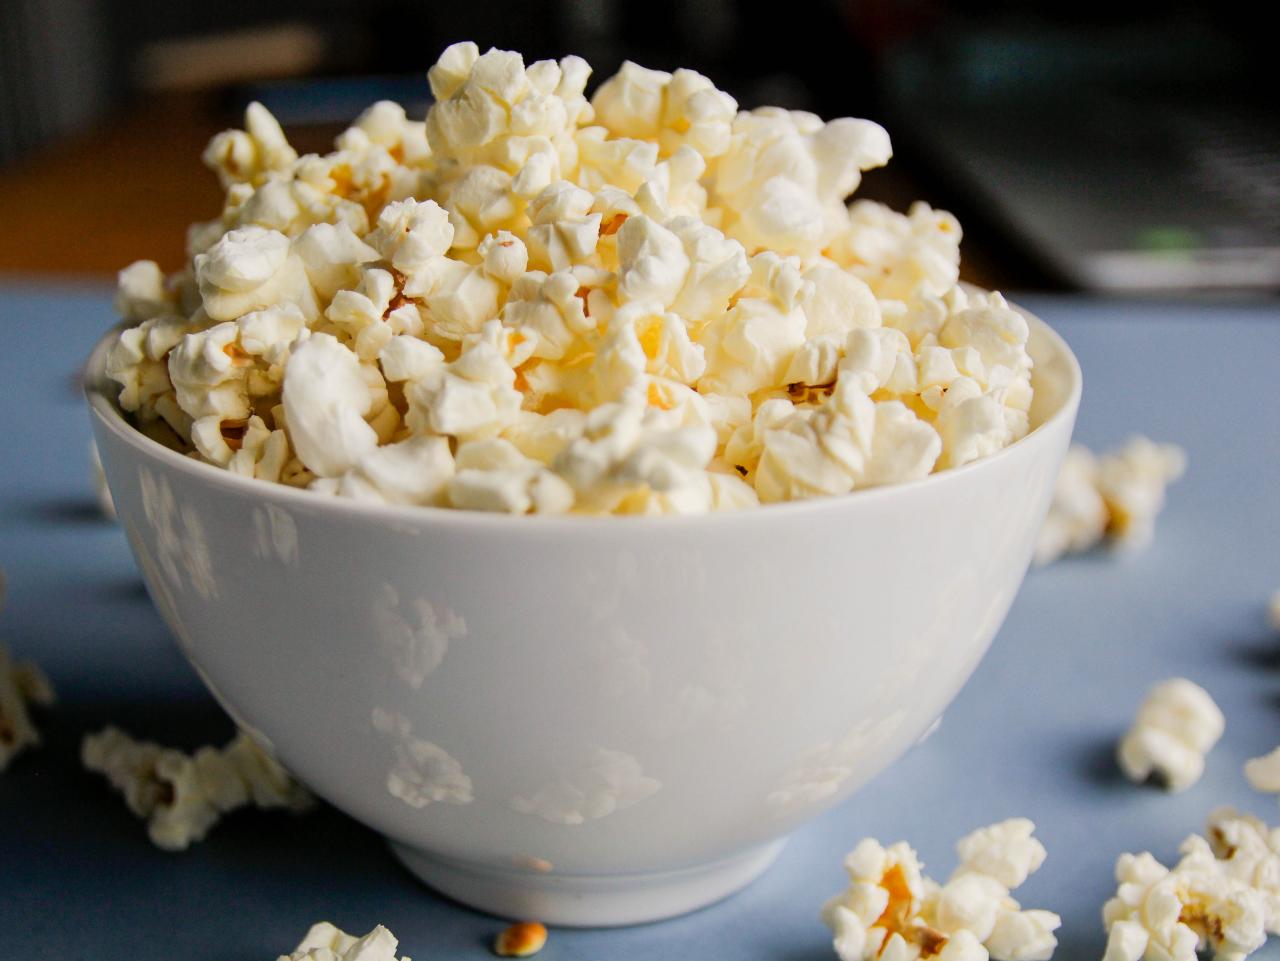 https://food.fnr.sndimg.com/content/dam/images/food/fullset/2023/2/14/popcorn-in-white-bowl-on-blue-surface.jpg.rend.hgtvcom.1280.960.suffix/1676483406371.jpeg